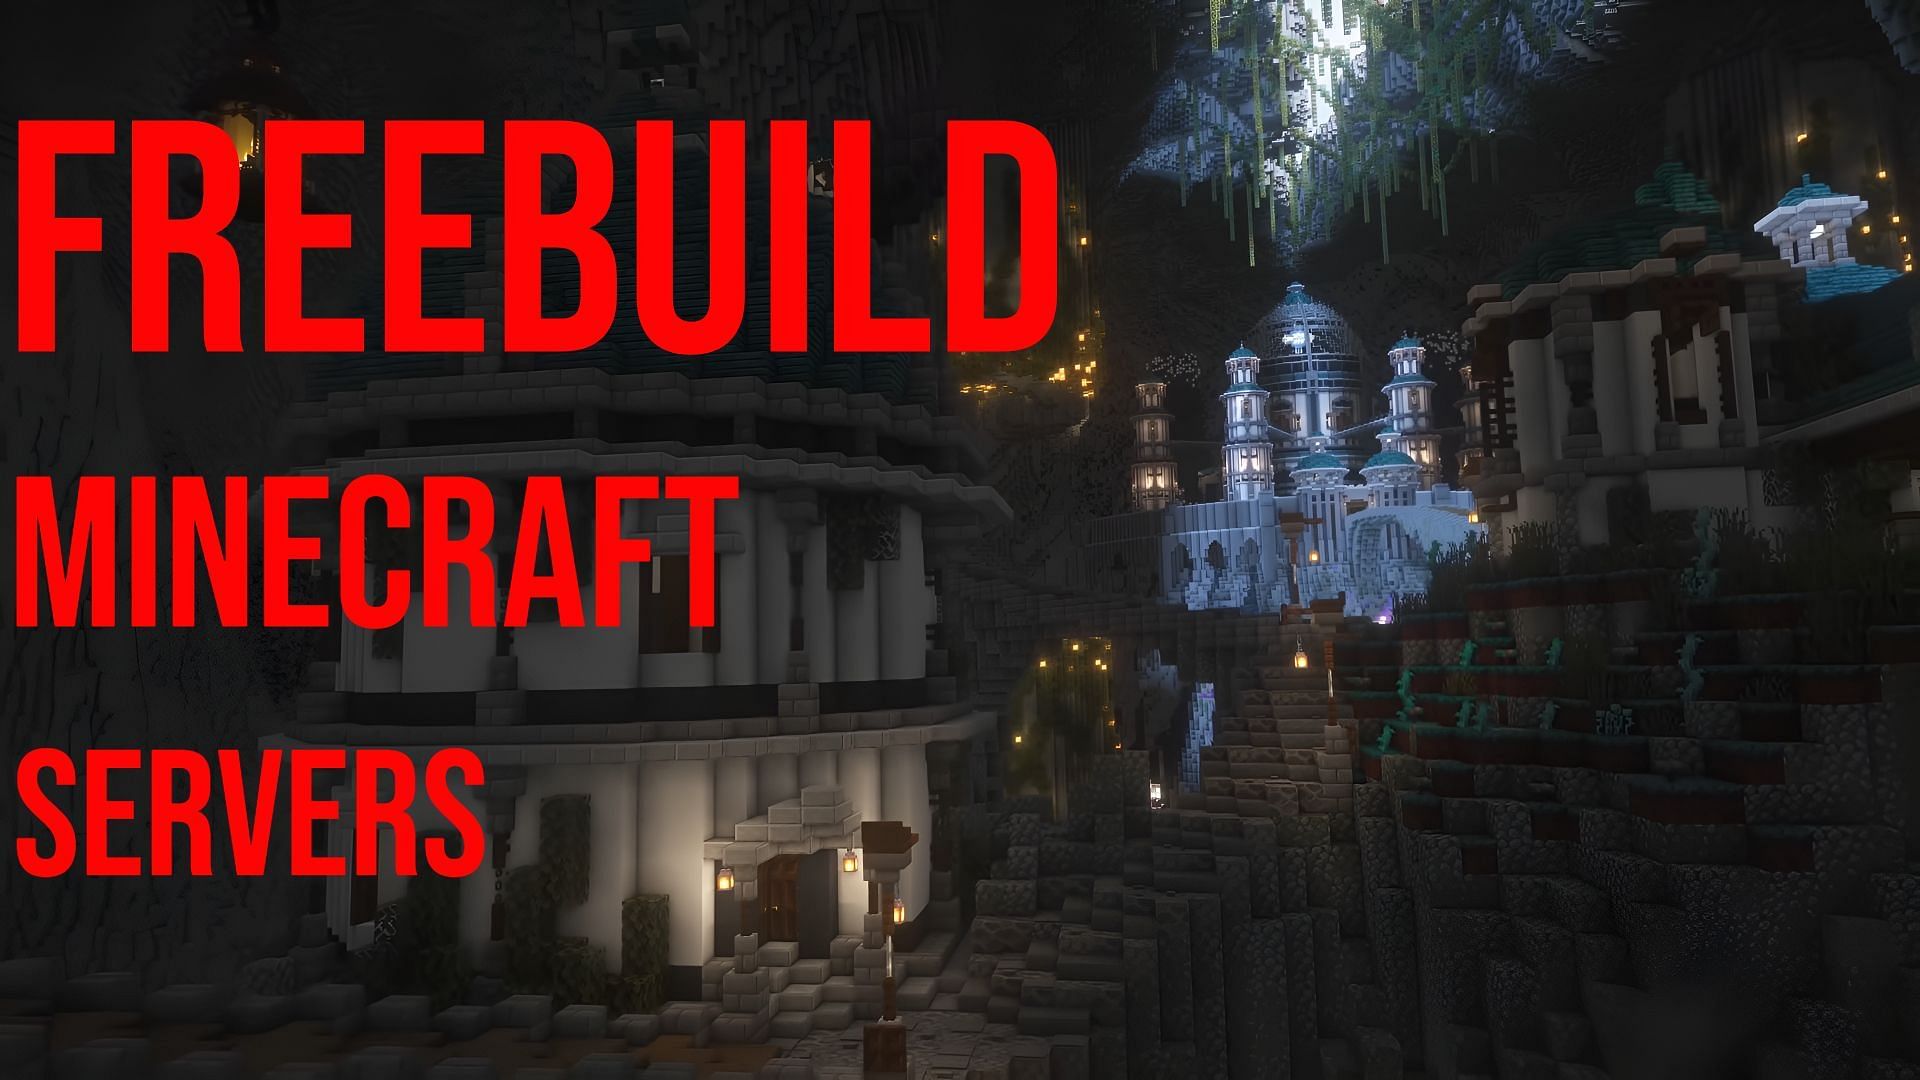 Freebuild Minecraft servers allow you to build with no restrictions (Image via Sportskeeda)